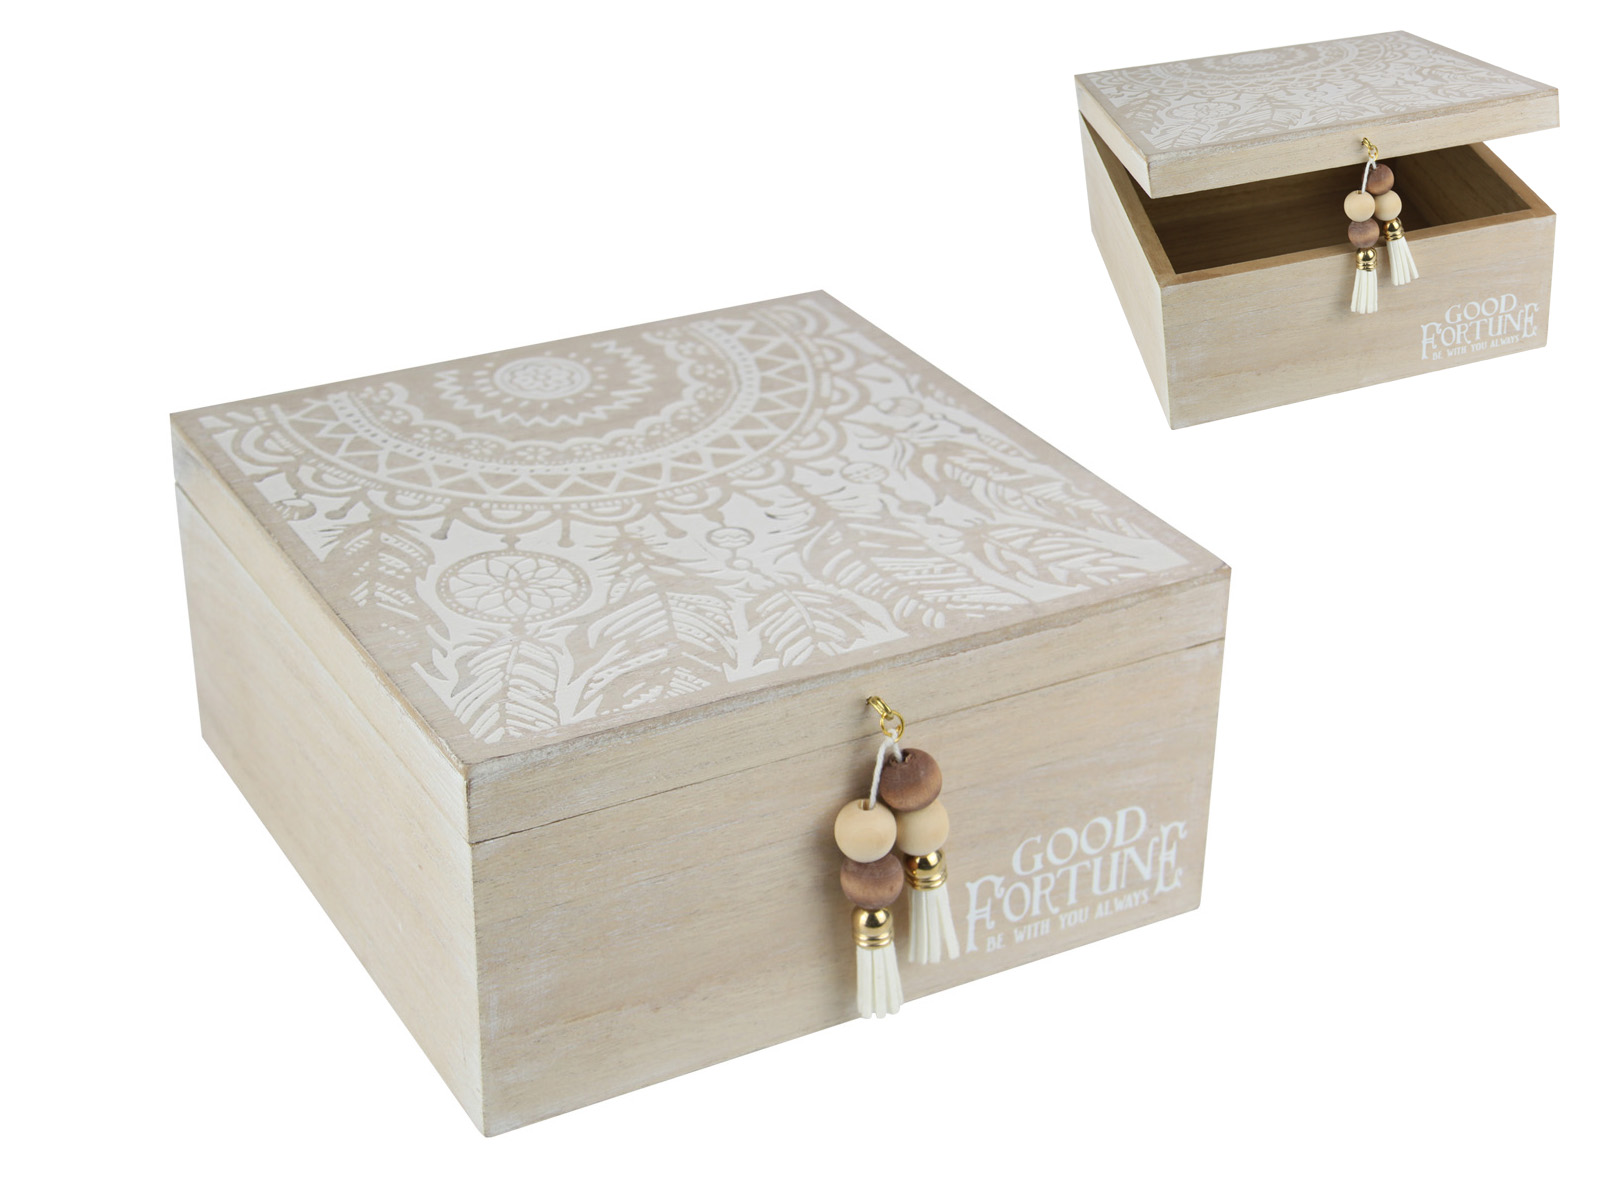 BoHo/Mandala Design "Good Fortune" Box with Tassels